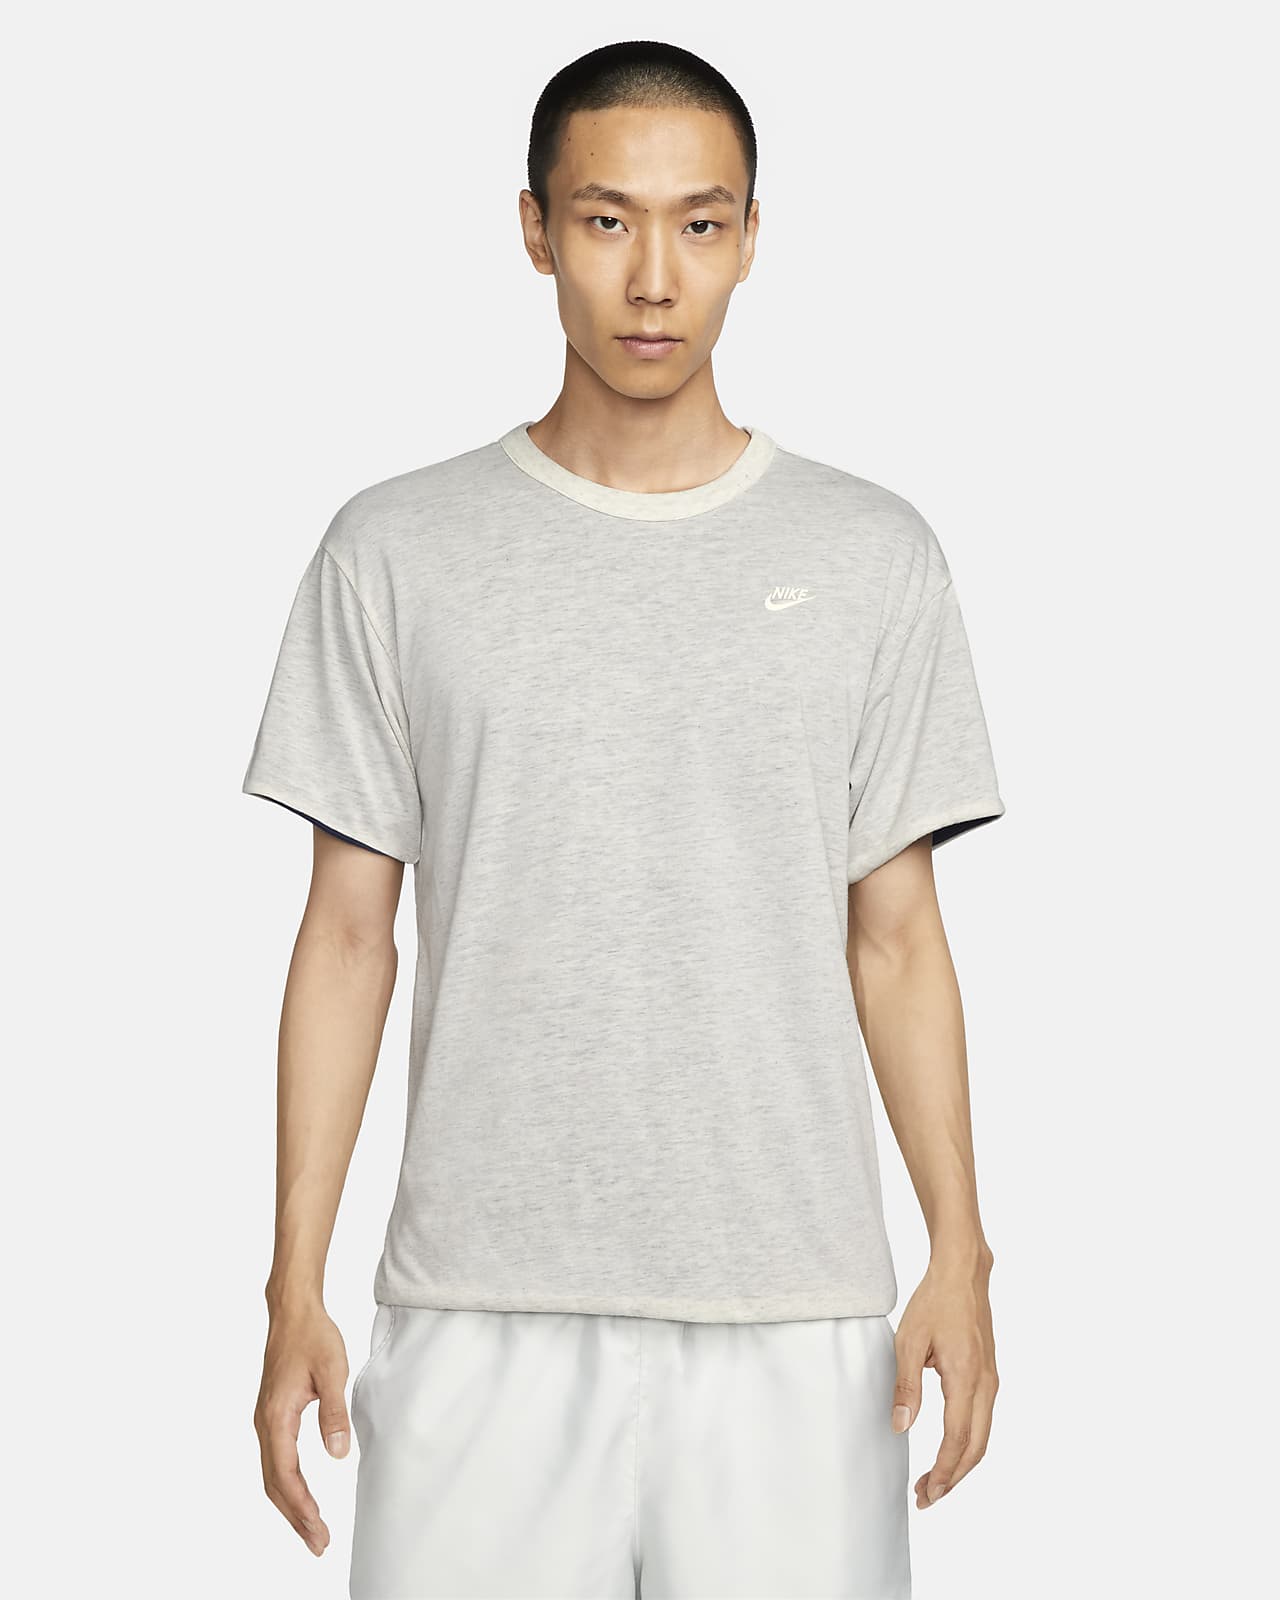 Nike Sportswear Circa Men's Short-Sleeve Top